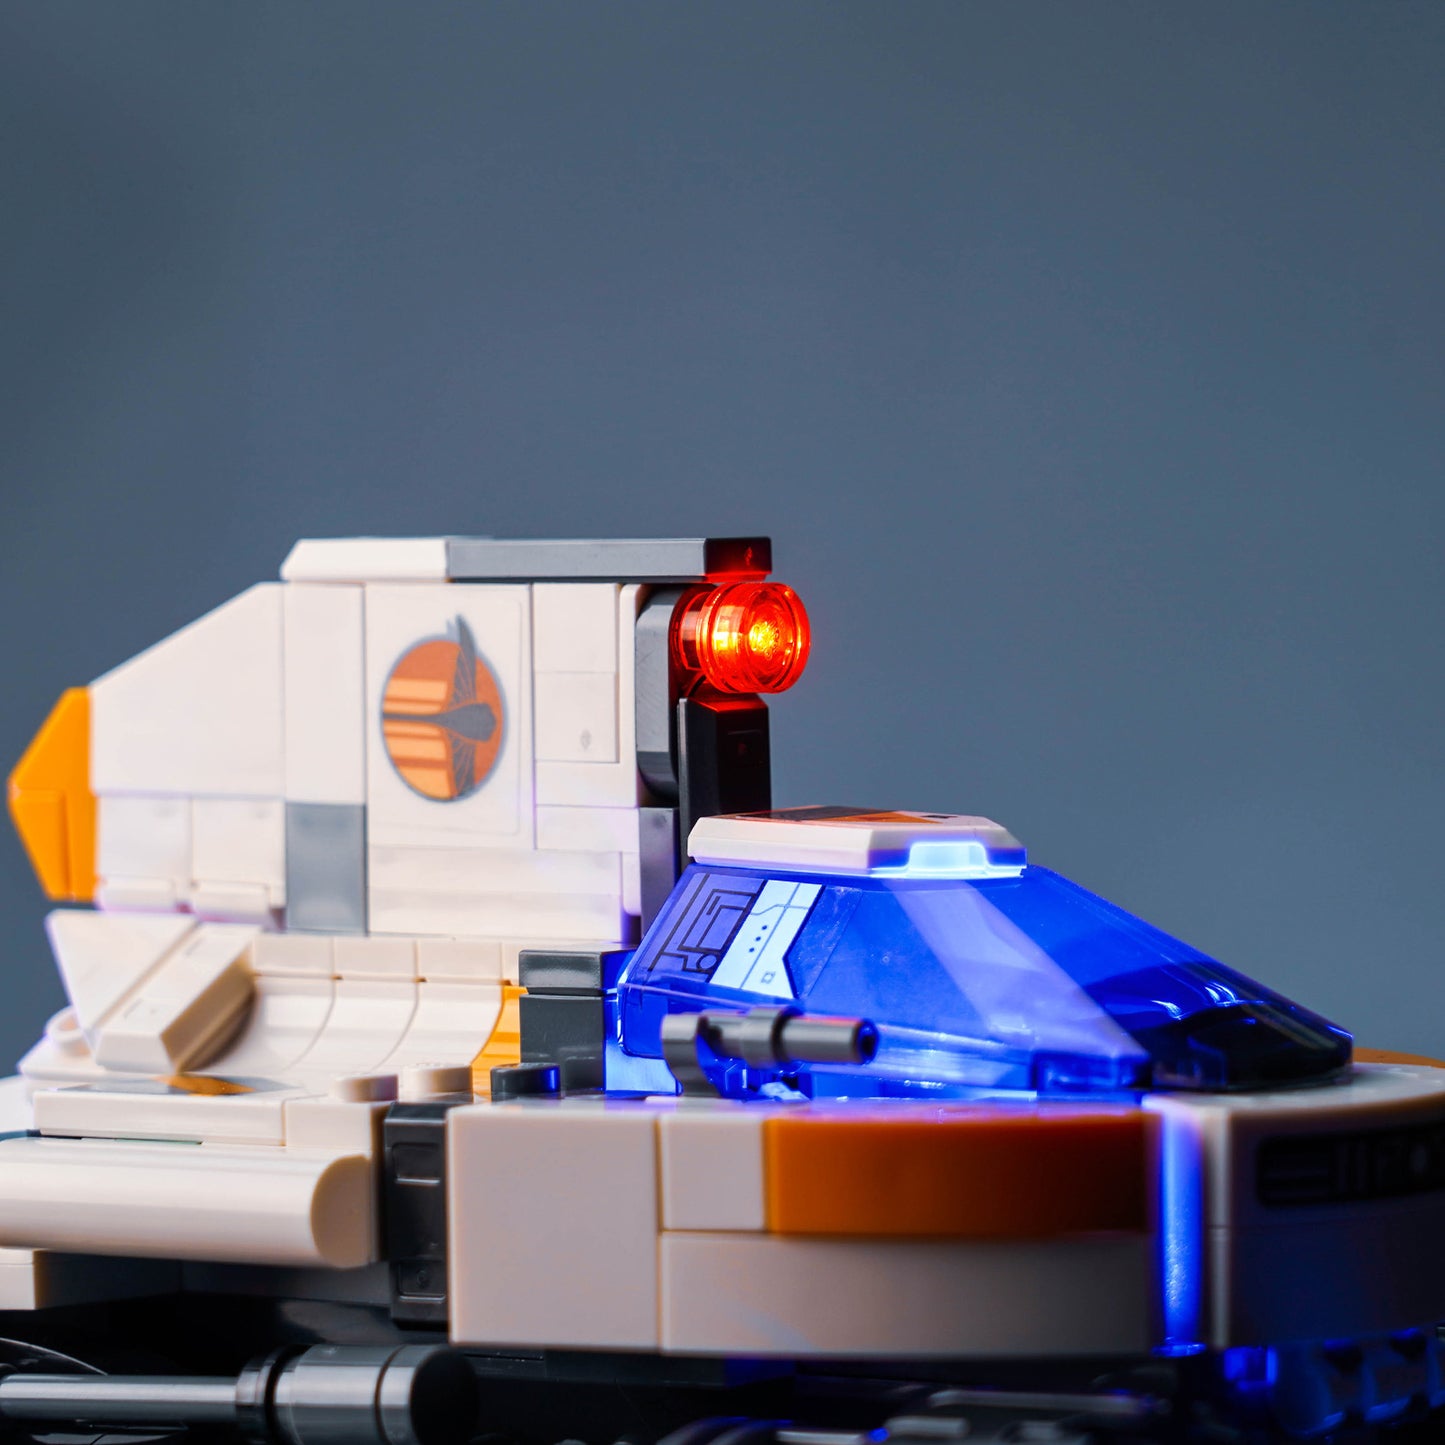 icuanuty LED lights kit lego 75357 Ghost & Phantom II Star Wars series lego lighting&lego light kits